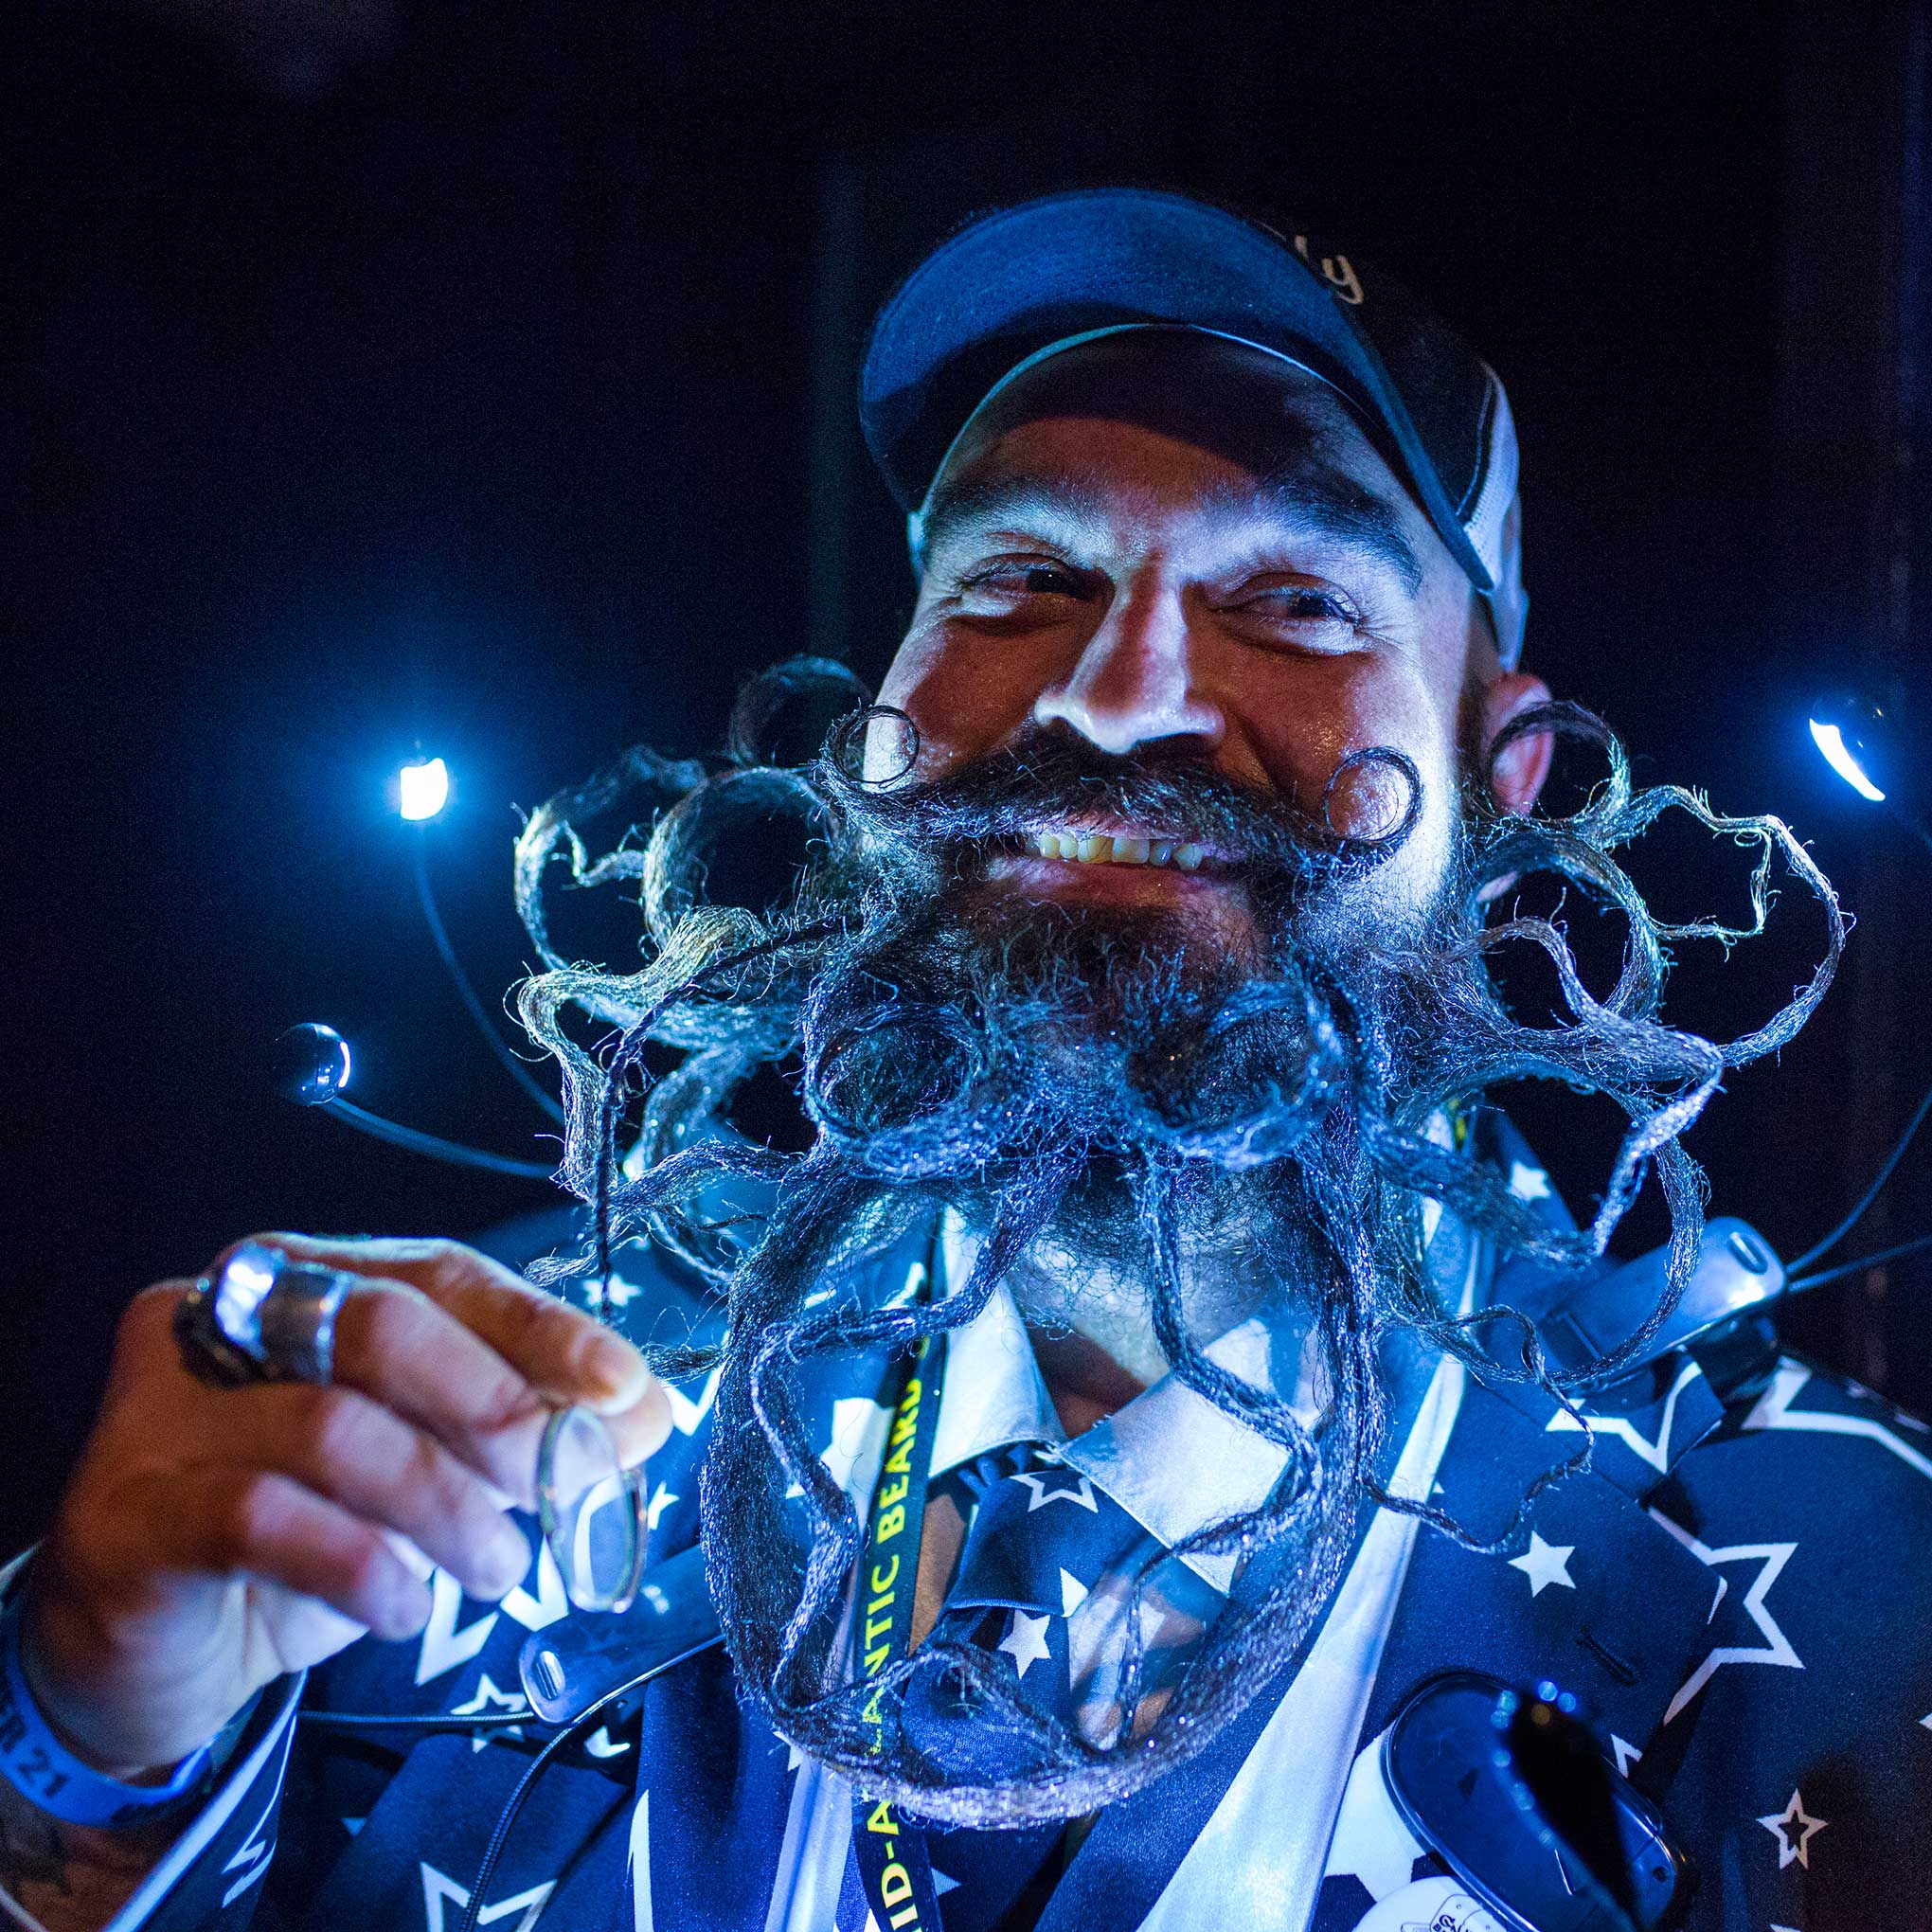 Whiskers Wonderland: Austria’s Beard Contest Celebrates Hirsute Artistry